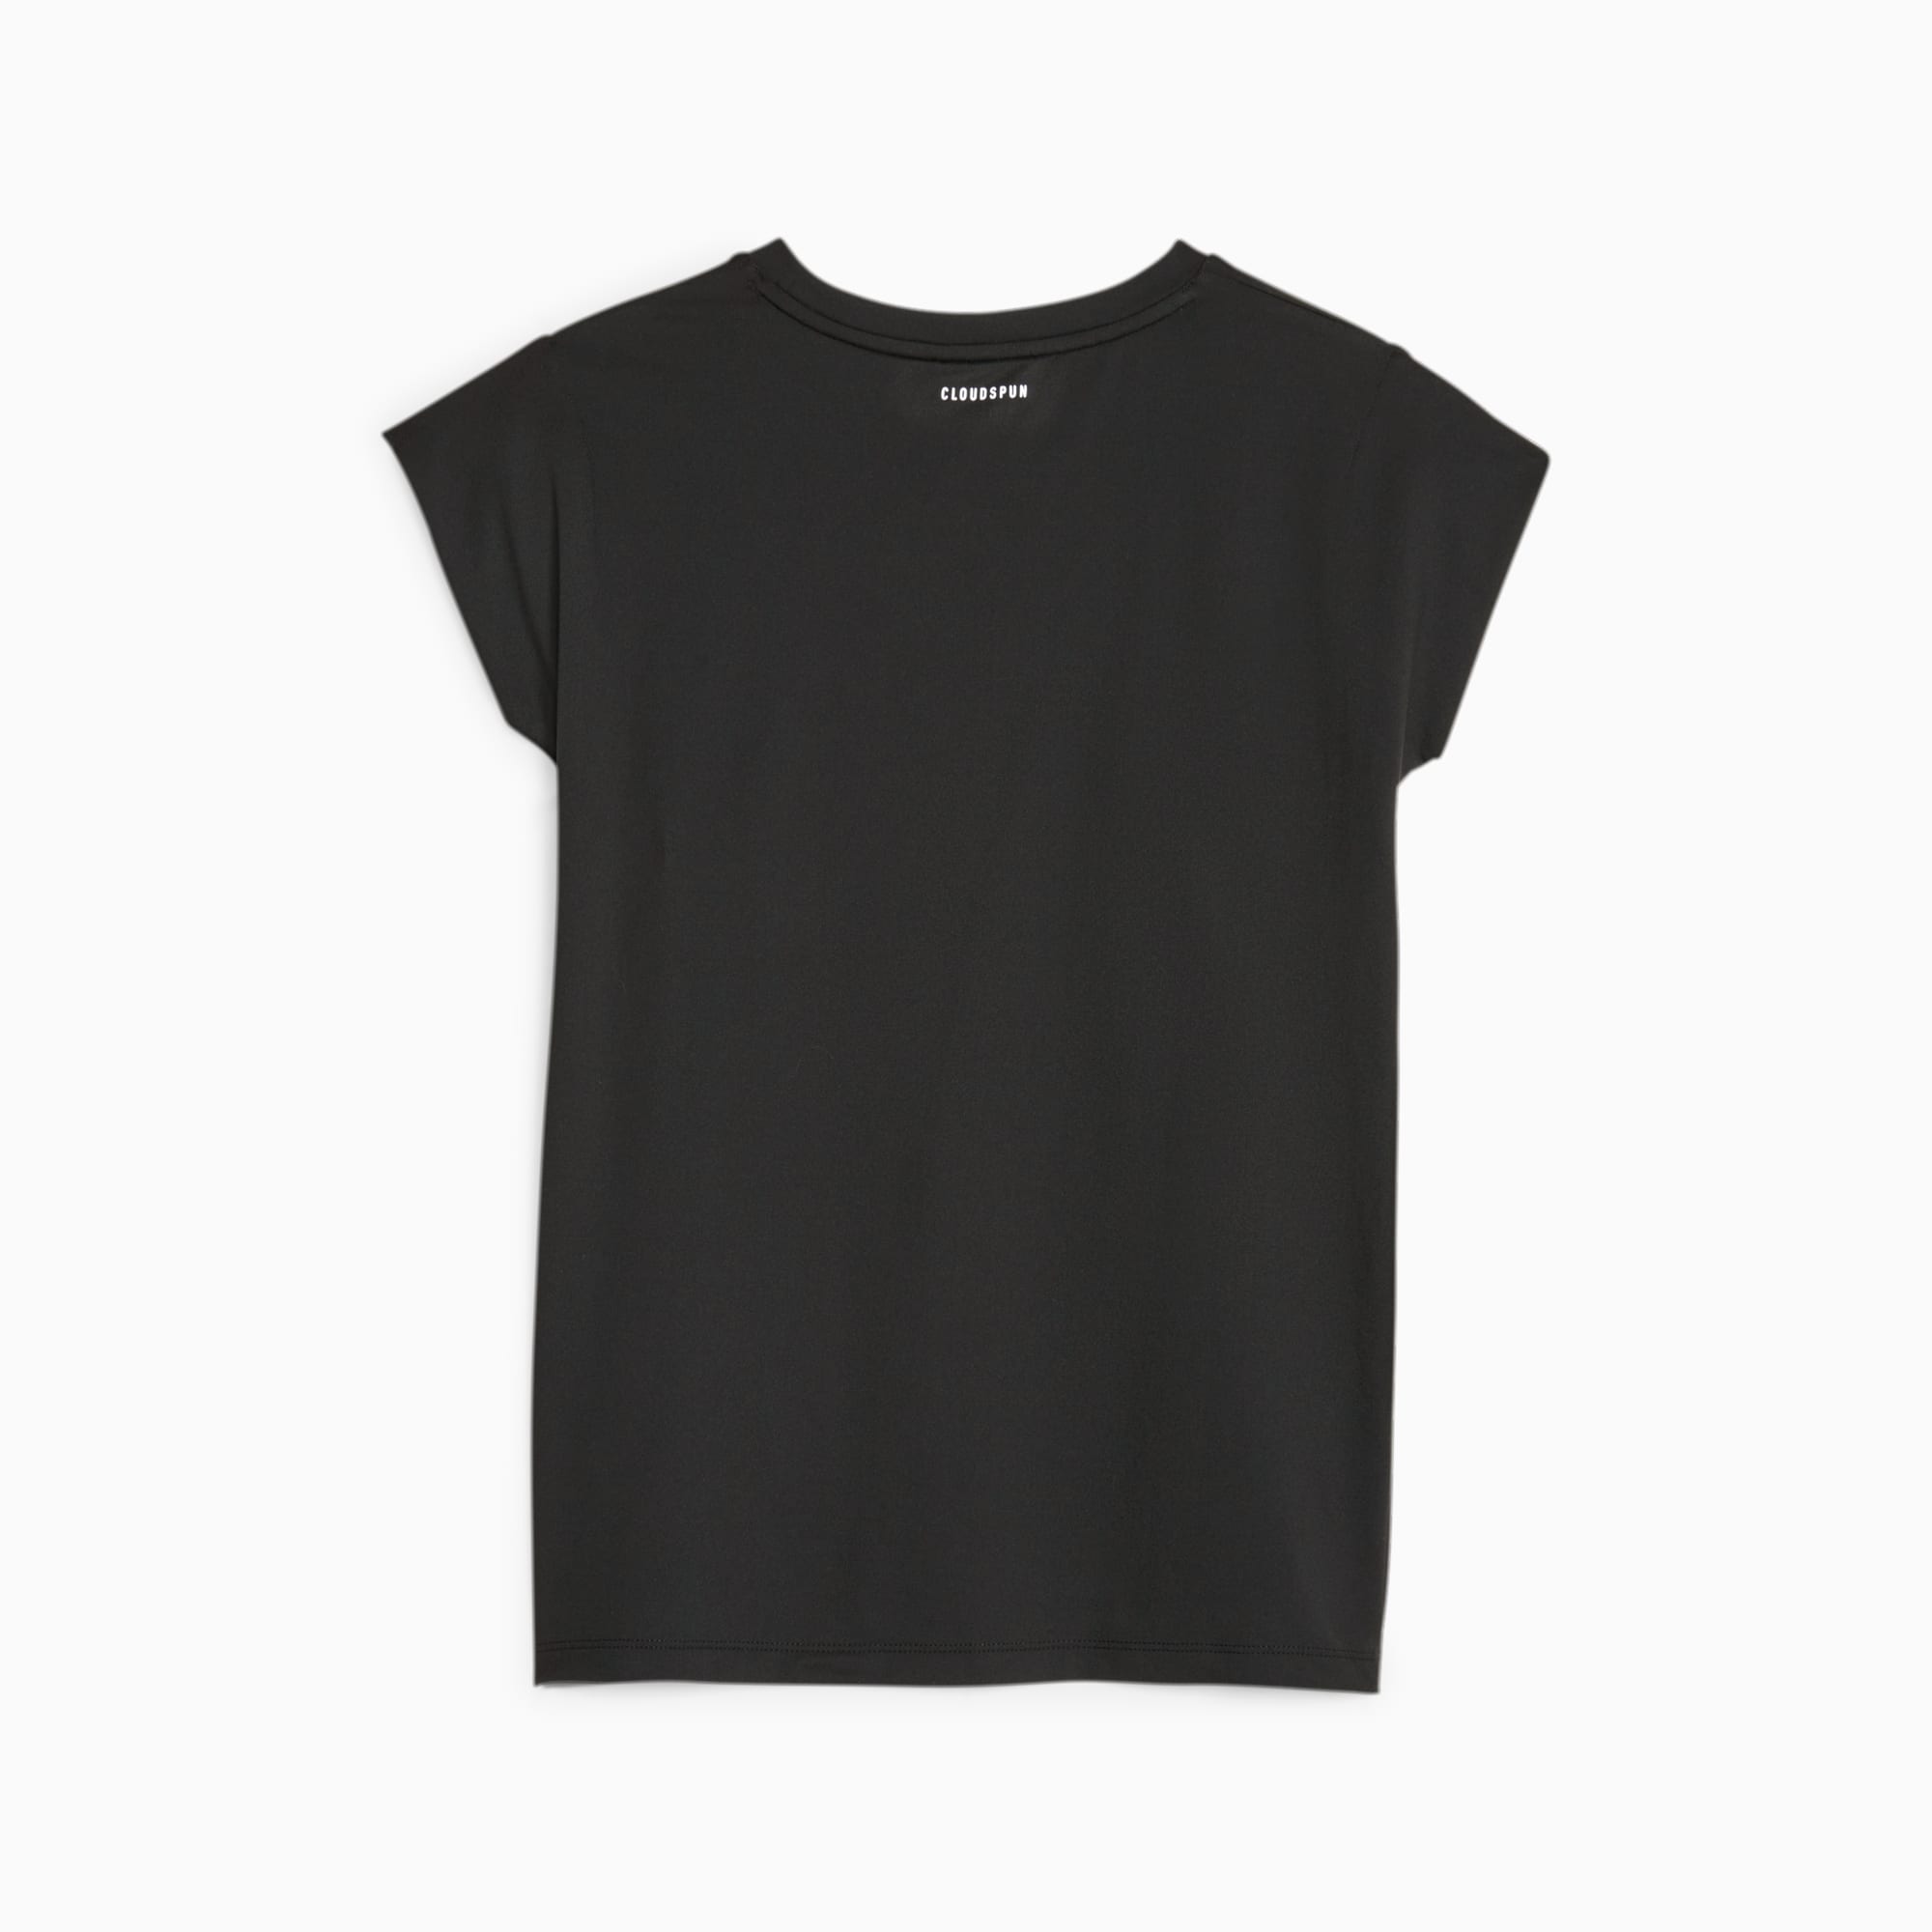 PUMA Cloudspun Trend Training Tee Shirt Women, Black, Size XS, Clothing